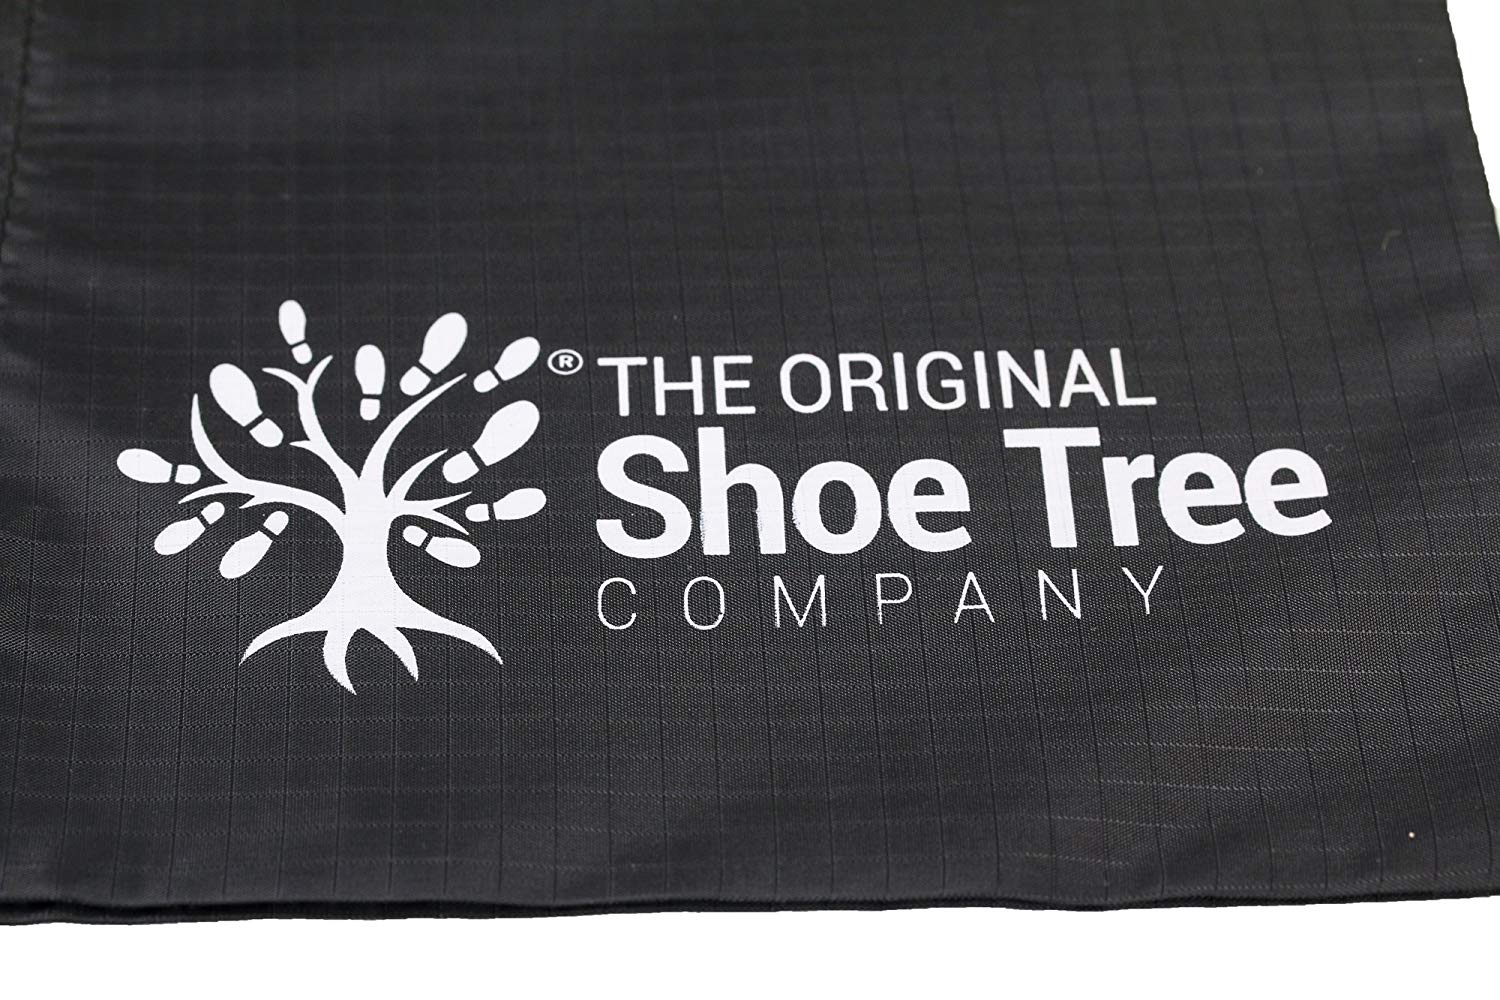 Black Tree Footwear Company Logo - Footwear Company Logo With Black Tree